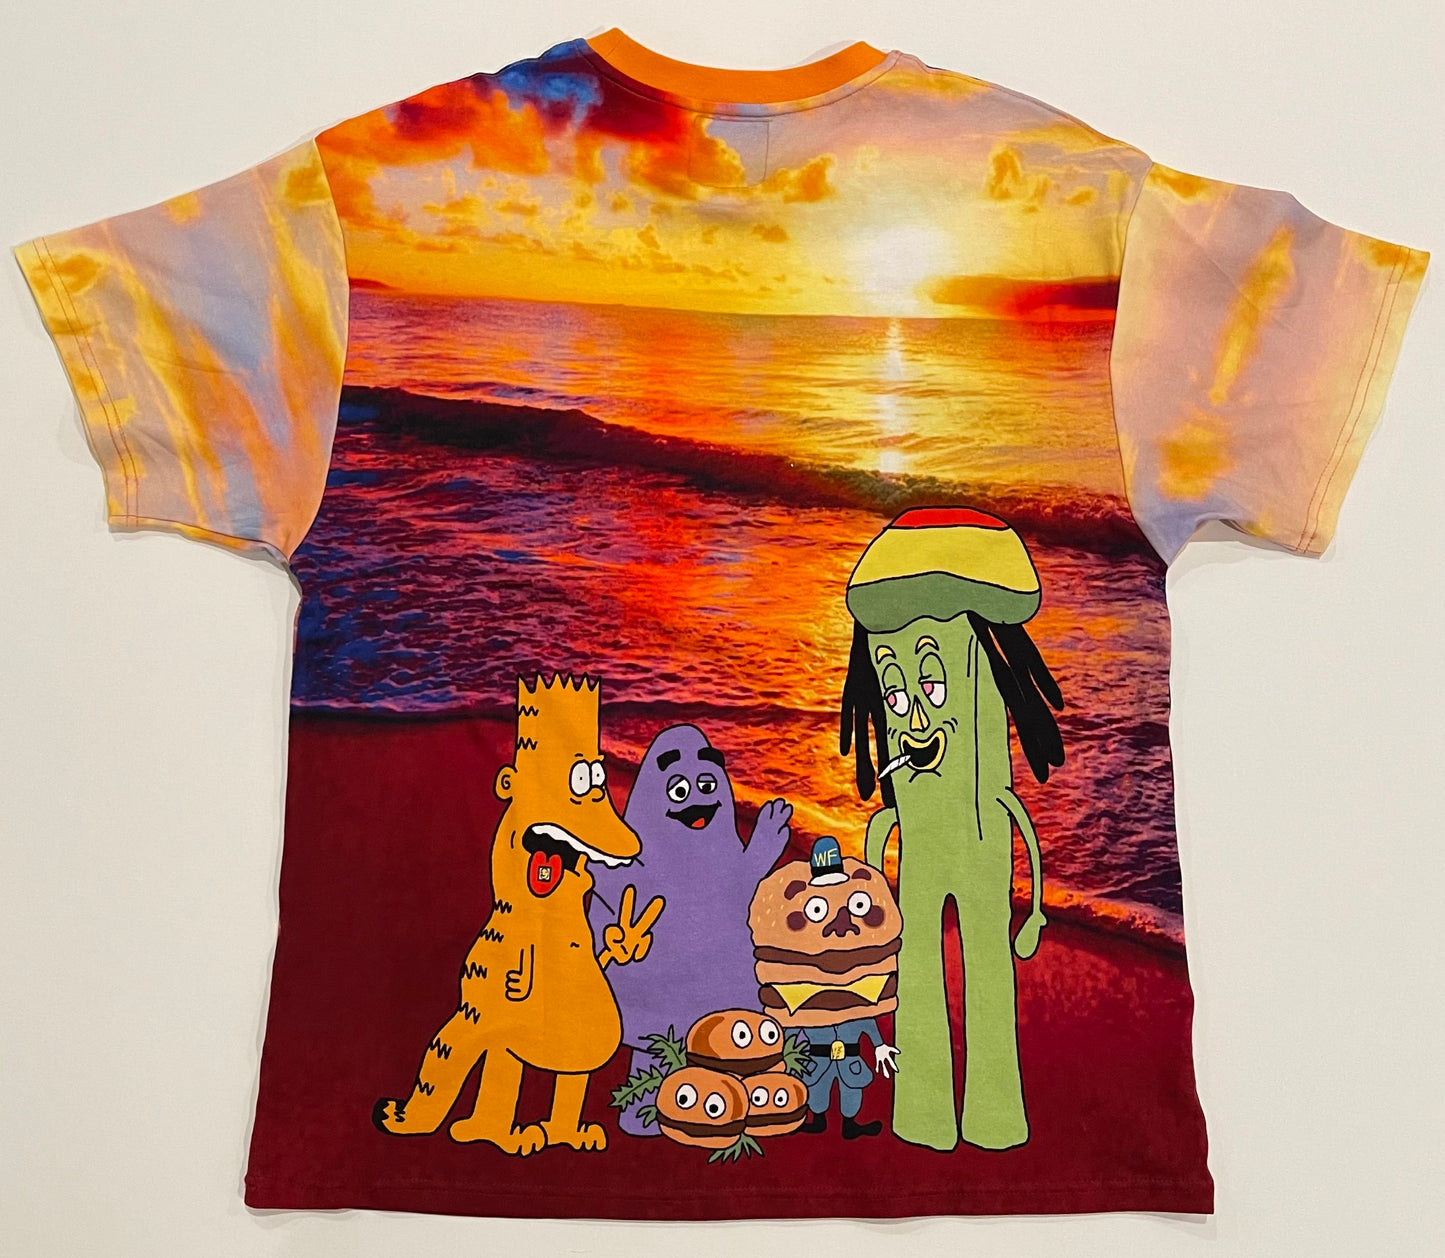 Life's a Beach T-Shirt